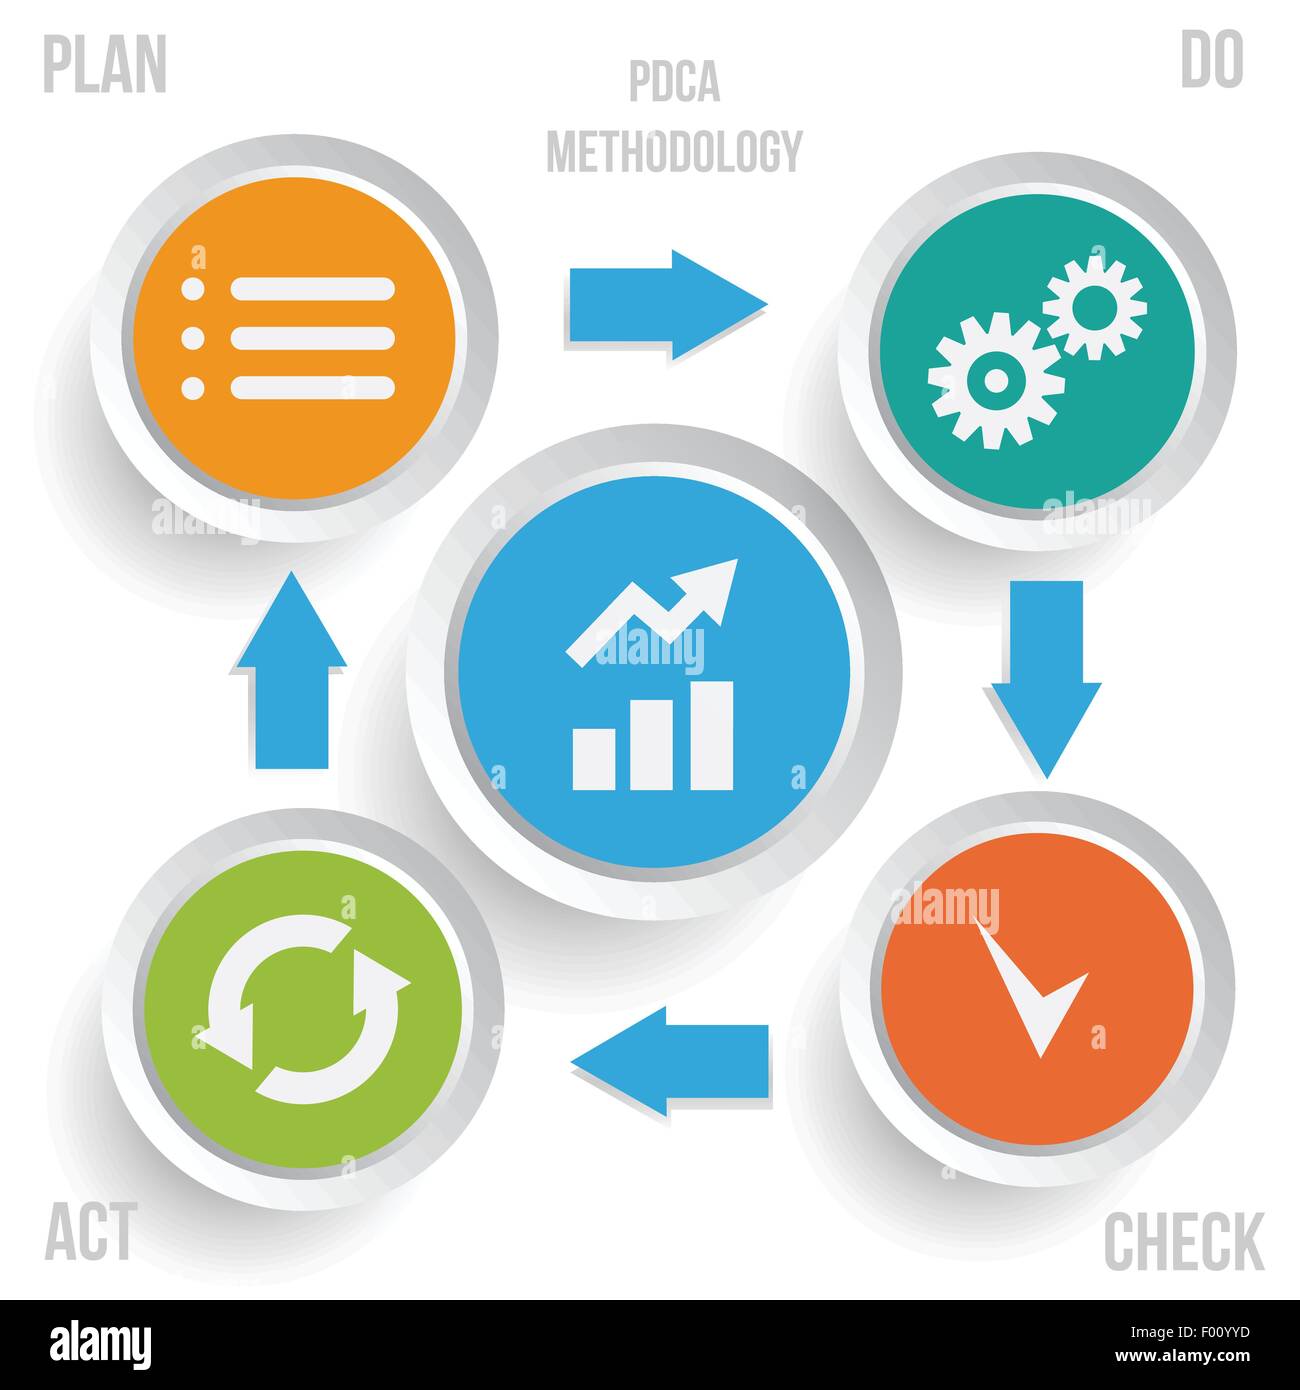 PDCA-Methode-Infografiken. Kontinuierliche Verbesserung-Methode-Vektor-Illustration. Stock Vektor